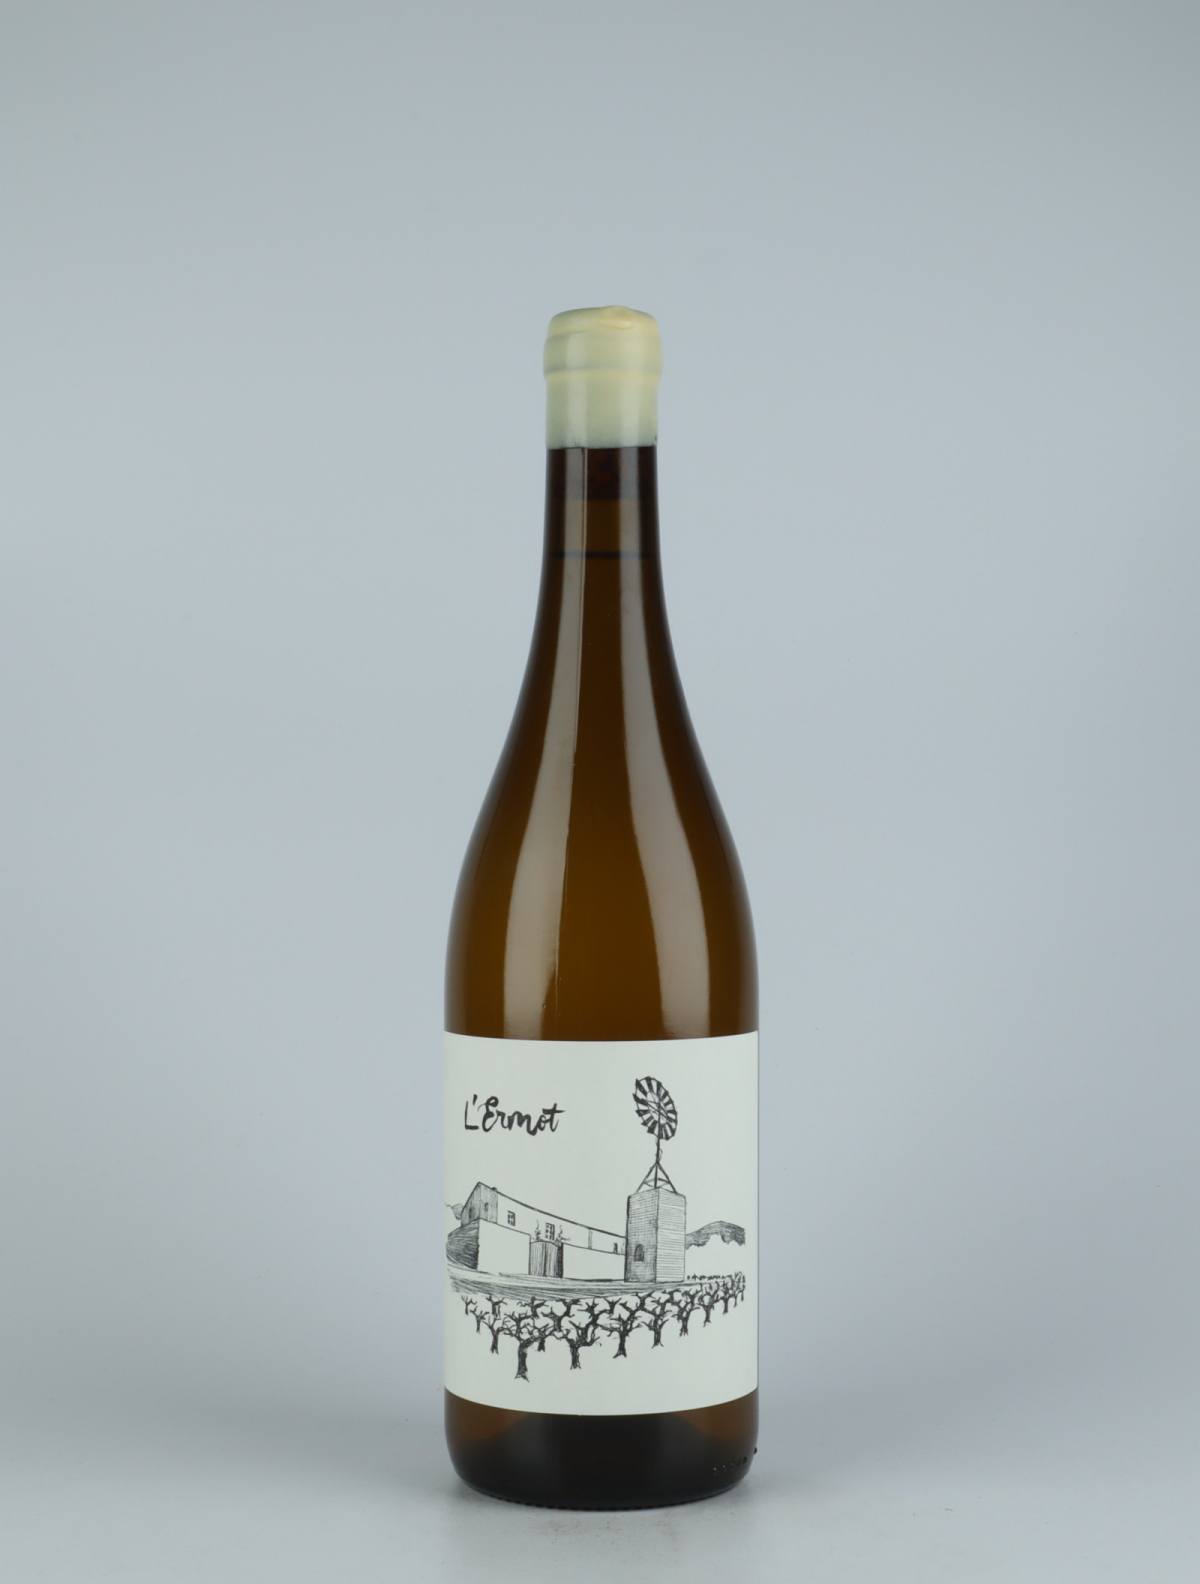 A bottle 2020 L'Ermot White wine from Celler la Salada, Penedès in Spain